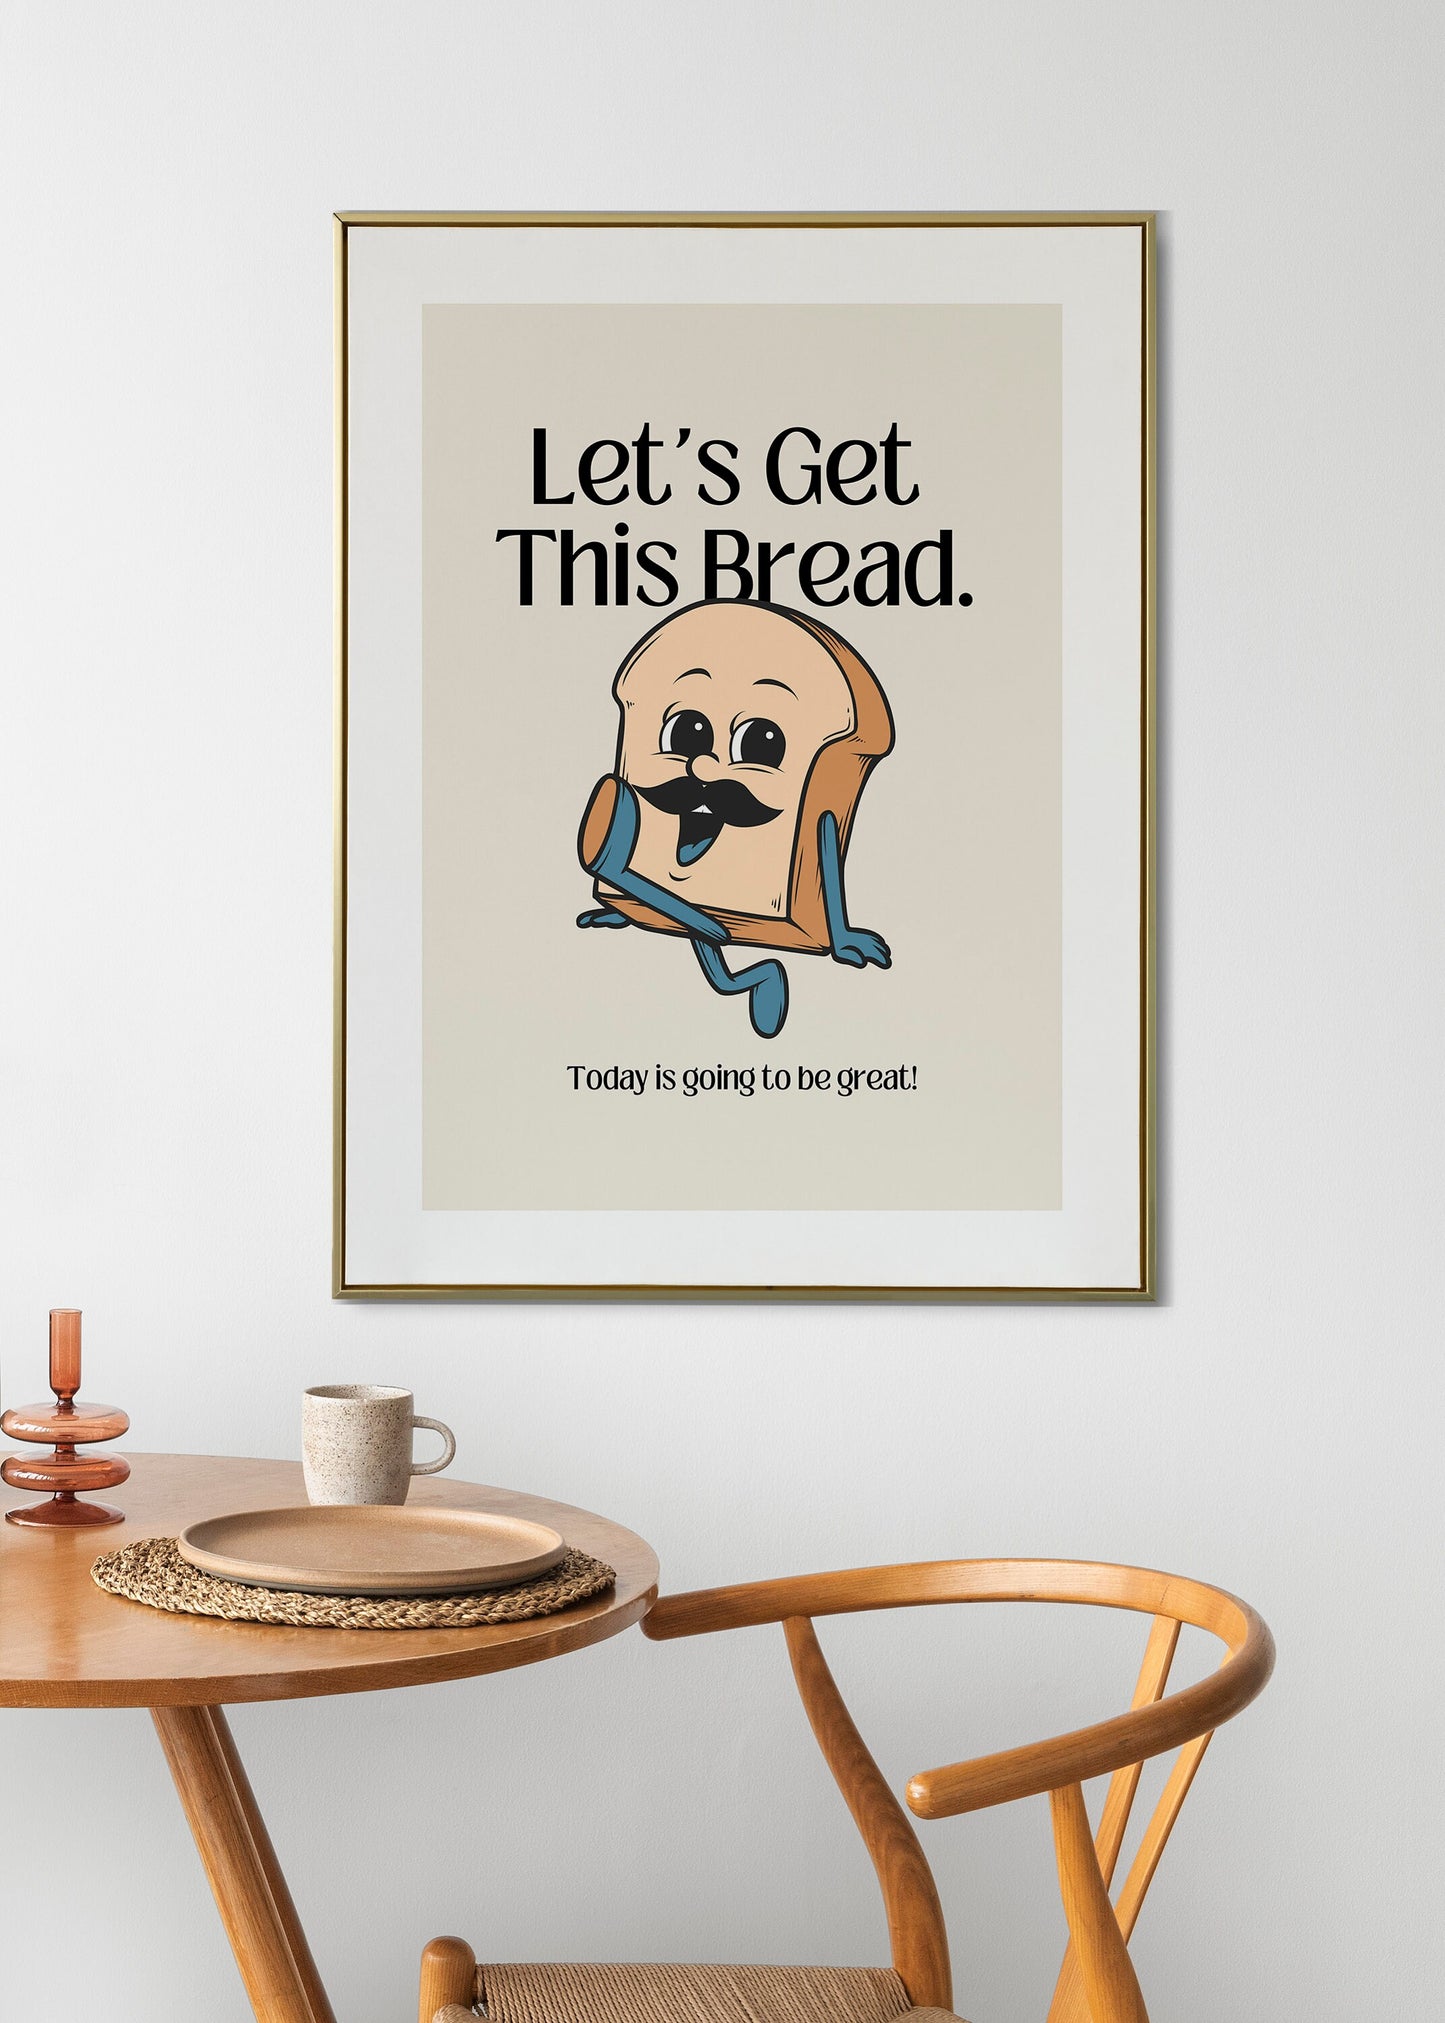 Retro Character Print, Let's Get This Bread, Motivational Kitchen Wall Art, Kitchen Prints, Retro Poster, Retro Wall Decor, Vintage Prints